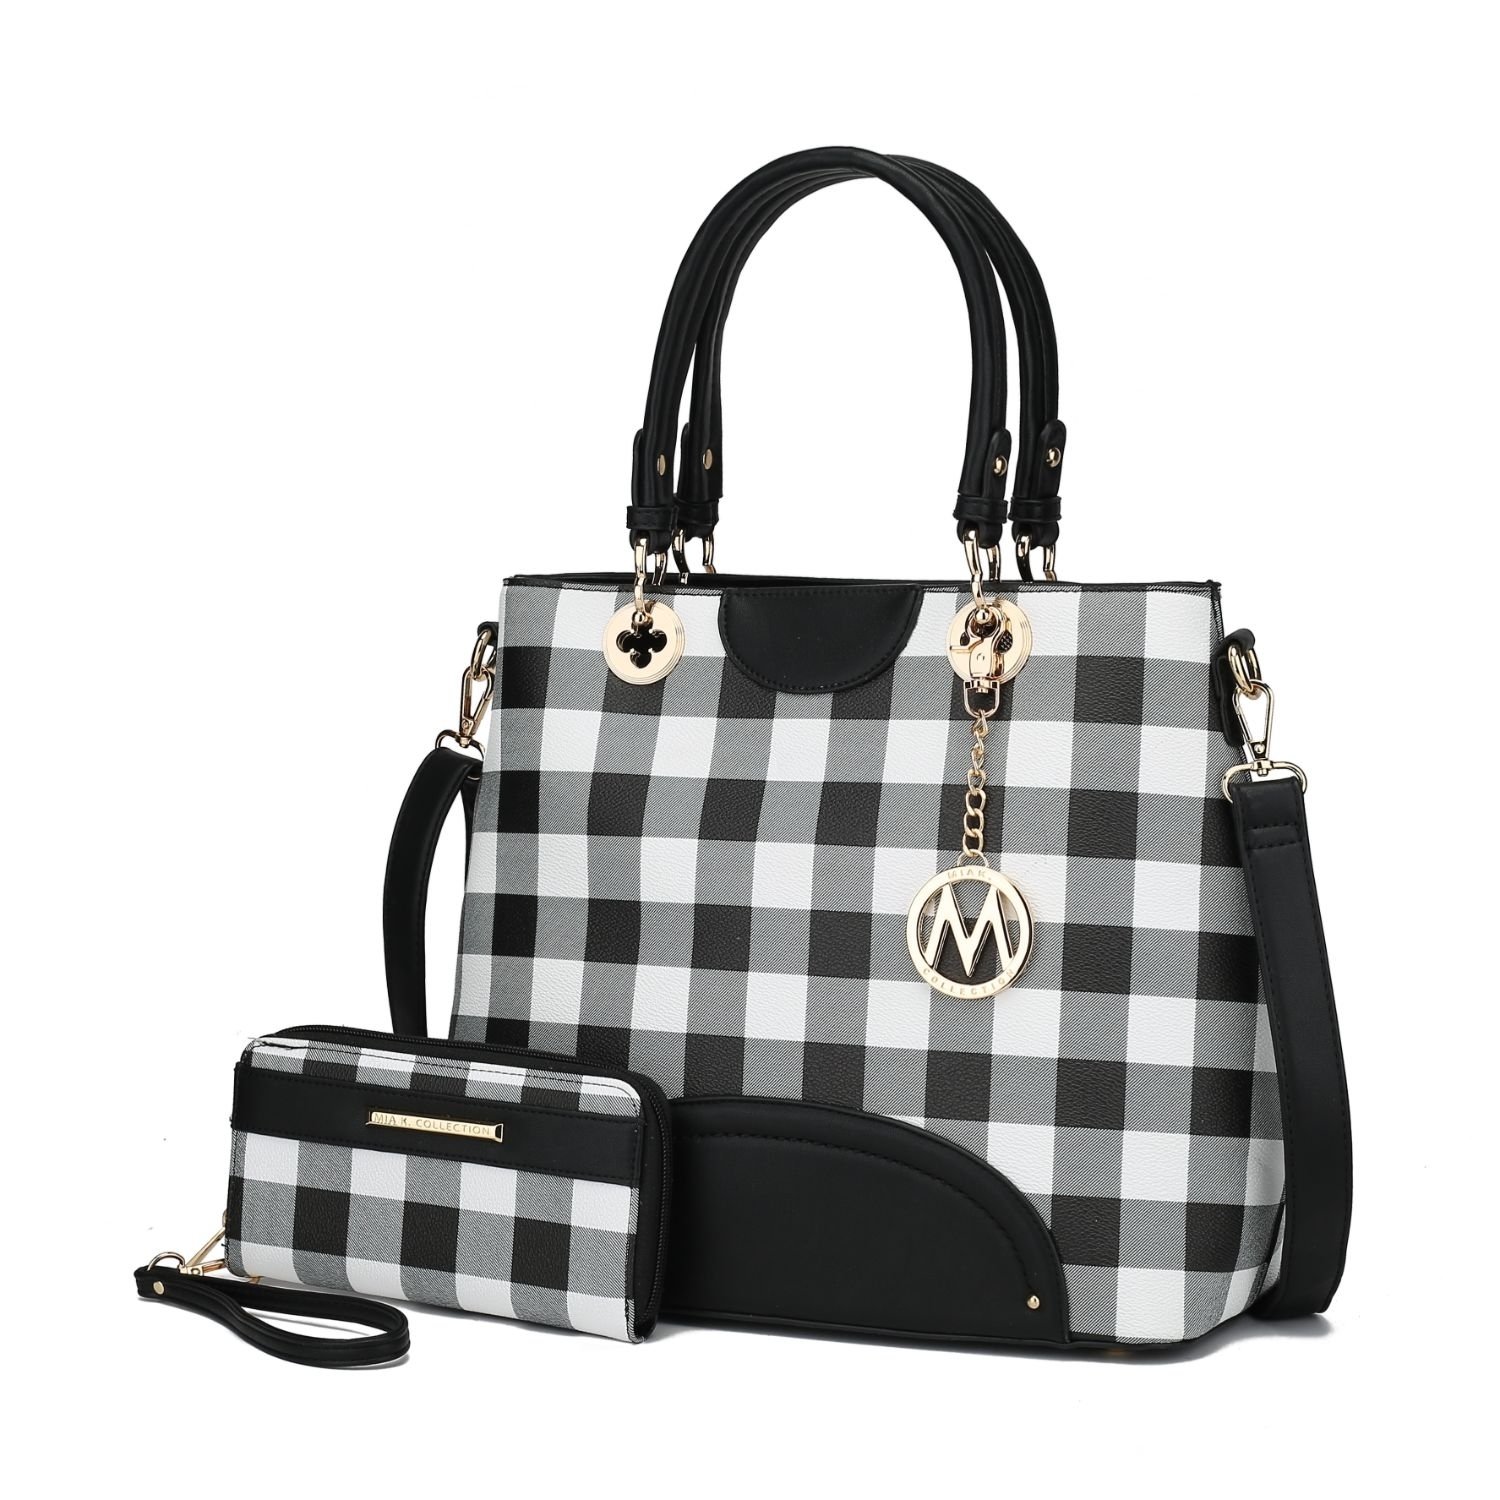 MKF Collection Gabriella Checkers Tote Handbag With Wallet By Mia K. - Navy